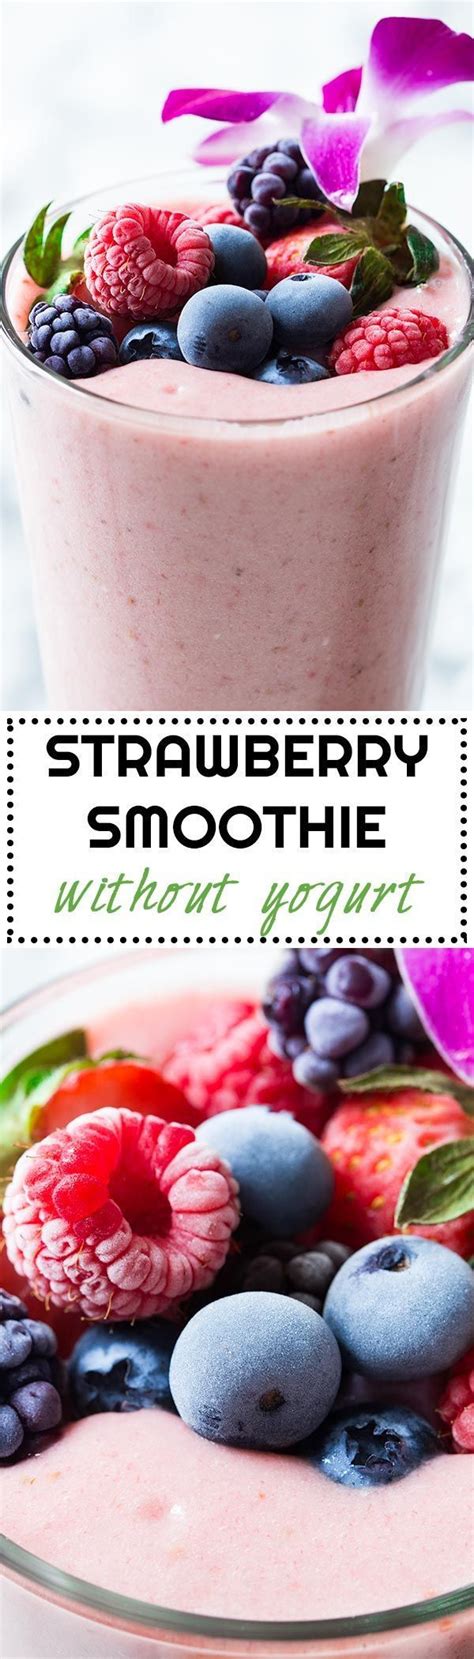 Strawberry Smoothie Without Yogurt Via Greenhealthycoo Smoothie